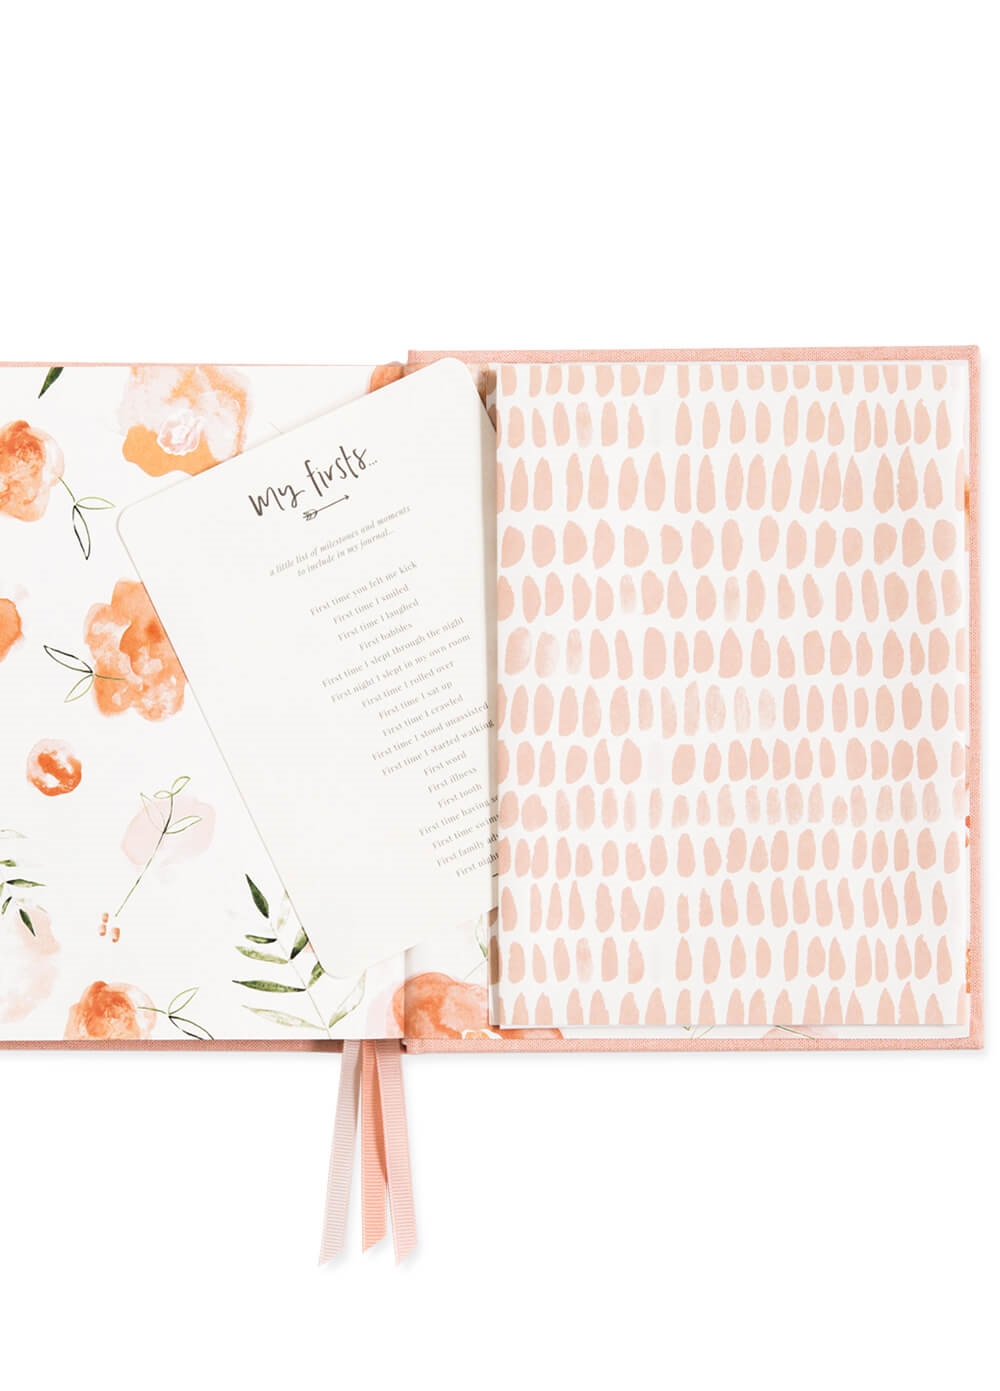 Emma Kate Co - Little Dreamer Baby Journal in Petal Pink | Queen Bee